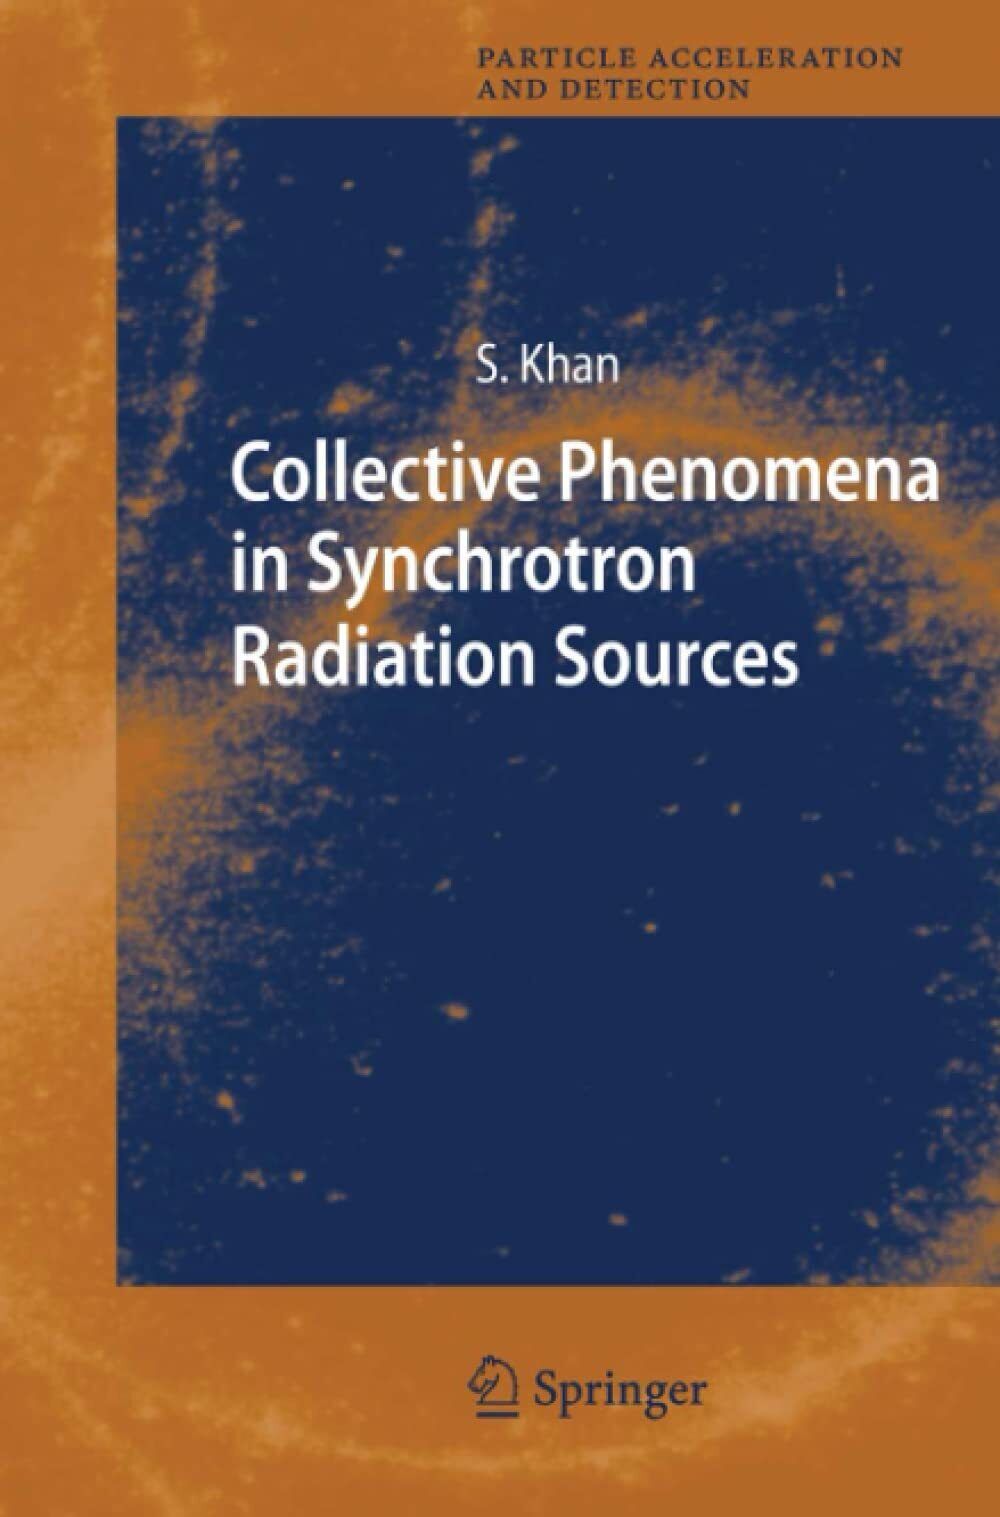 Collective Phenomena in Synchrotron Radiation Sources - Shaukat Khan - 2011